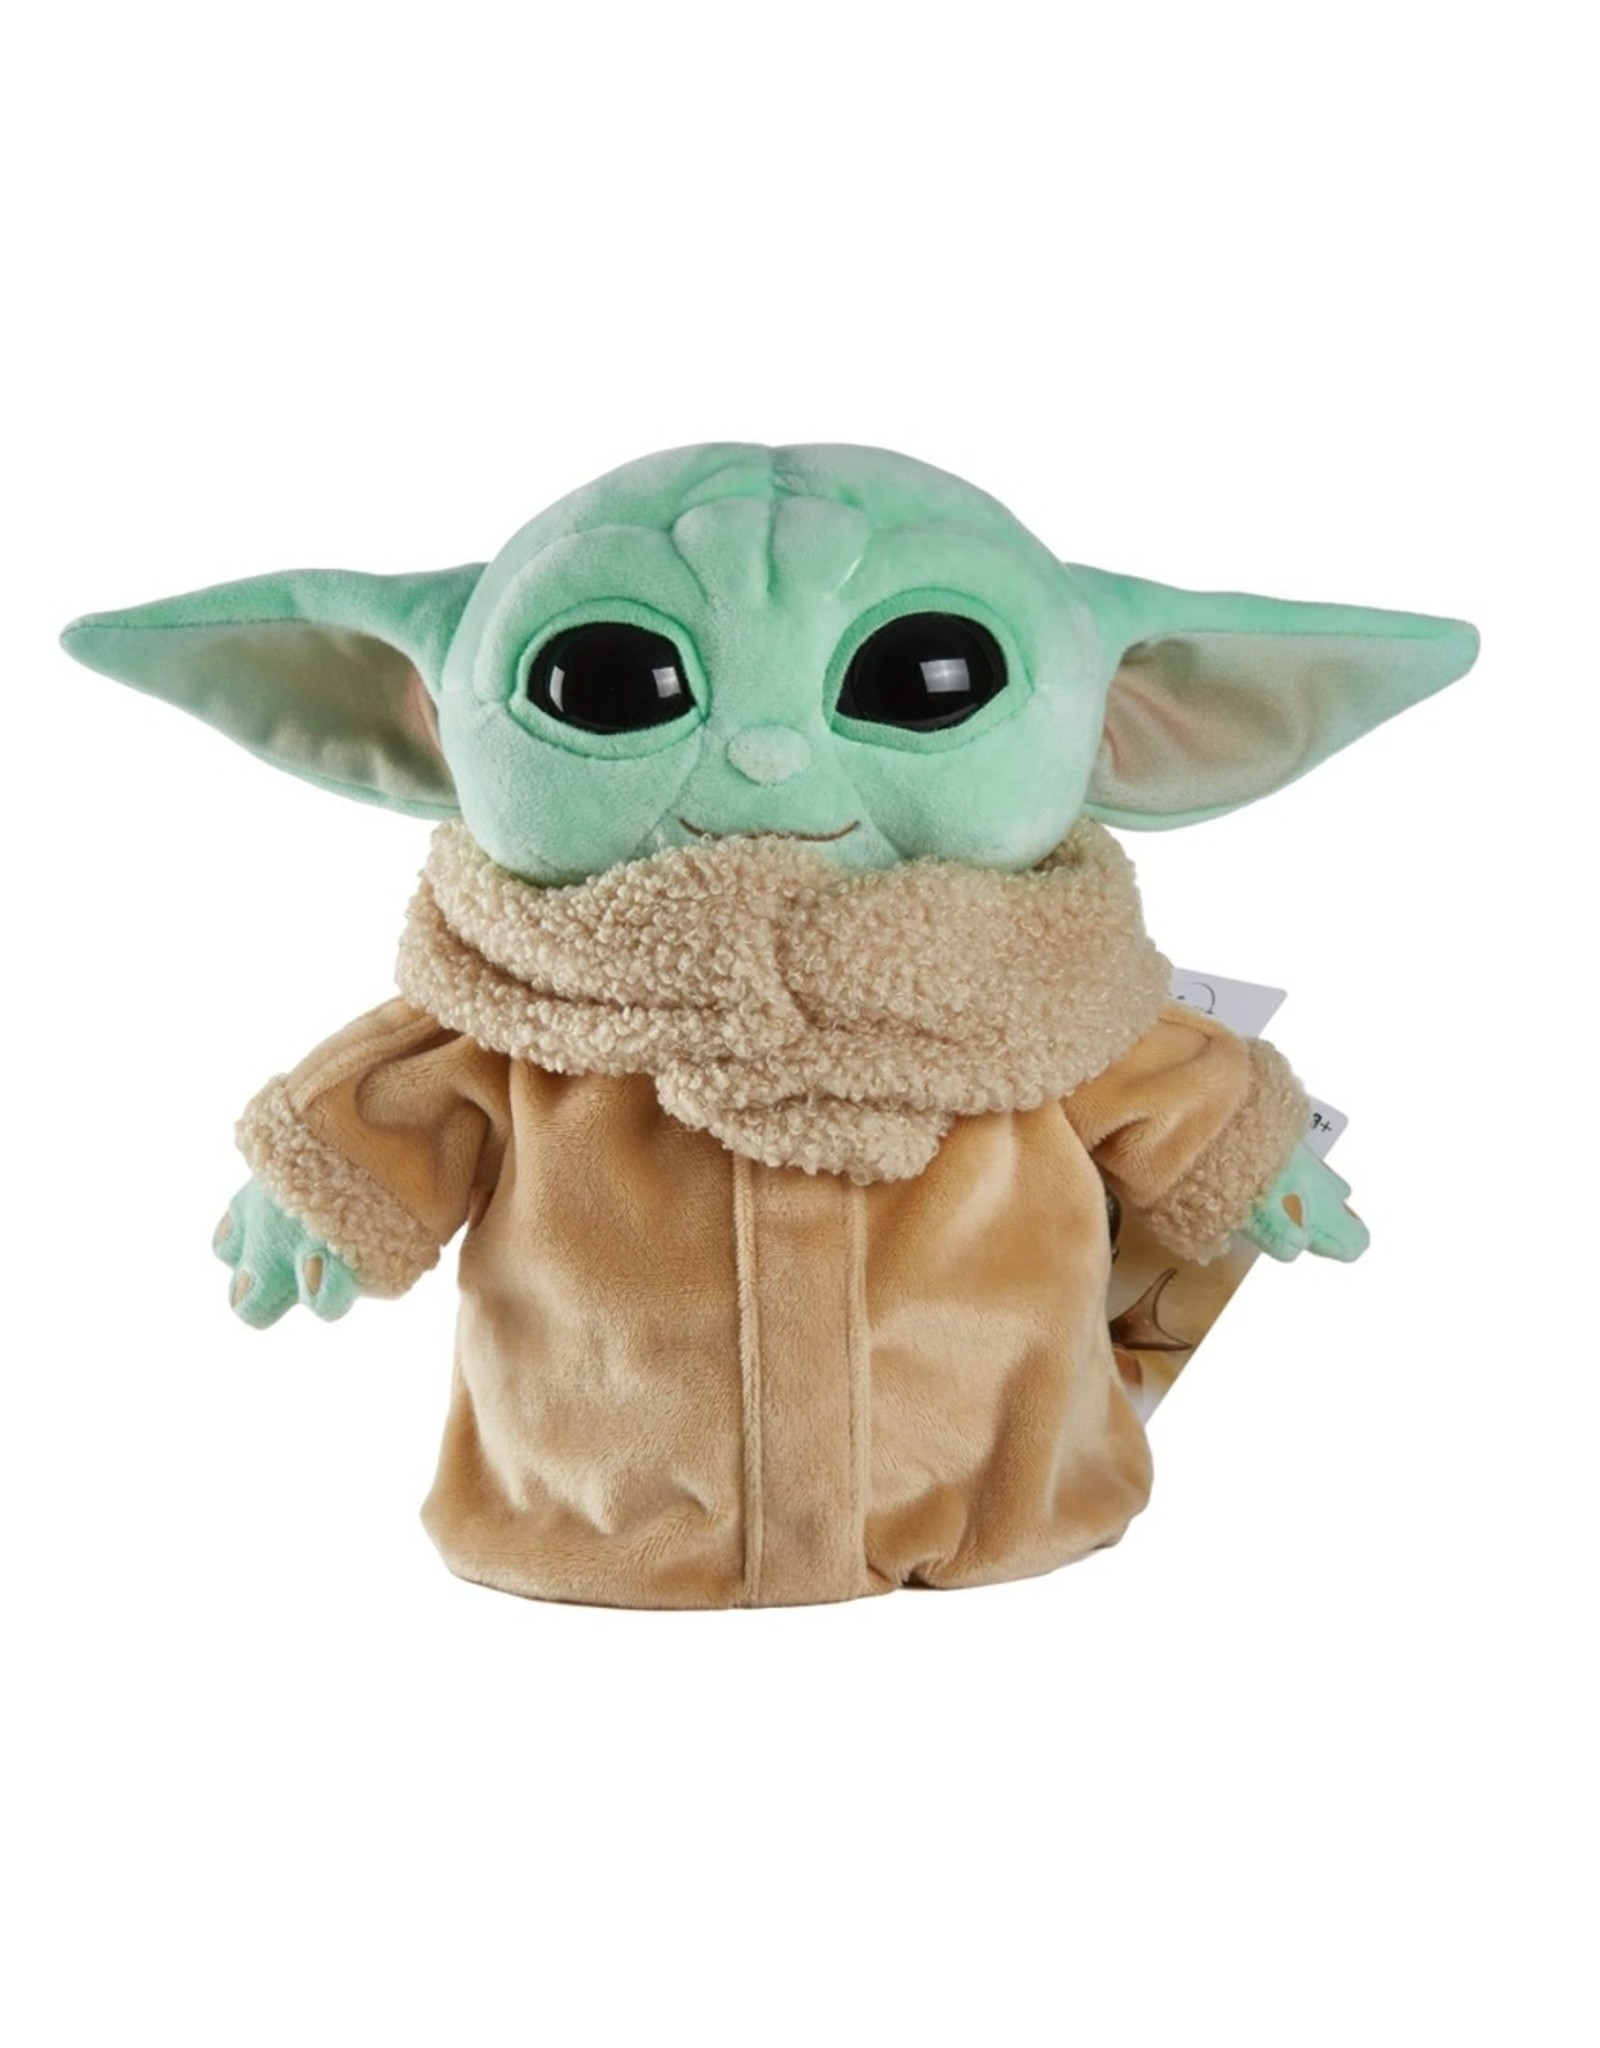 Star Wars The Child - Baby Yoda Plush